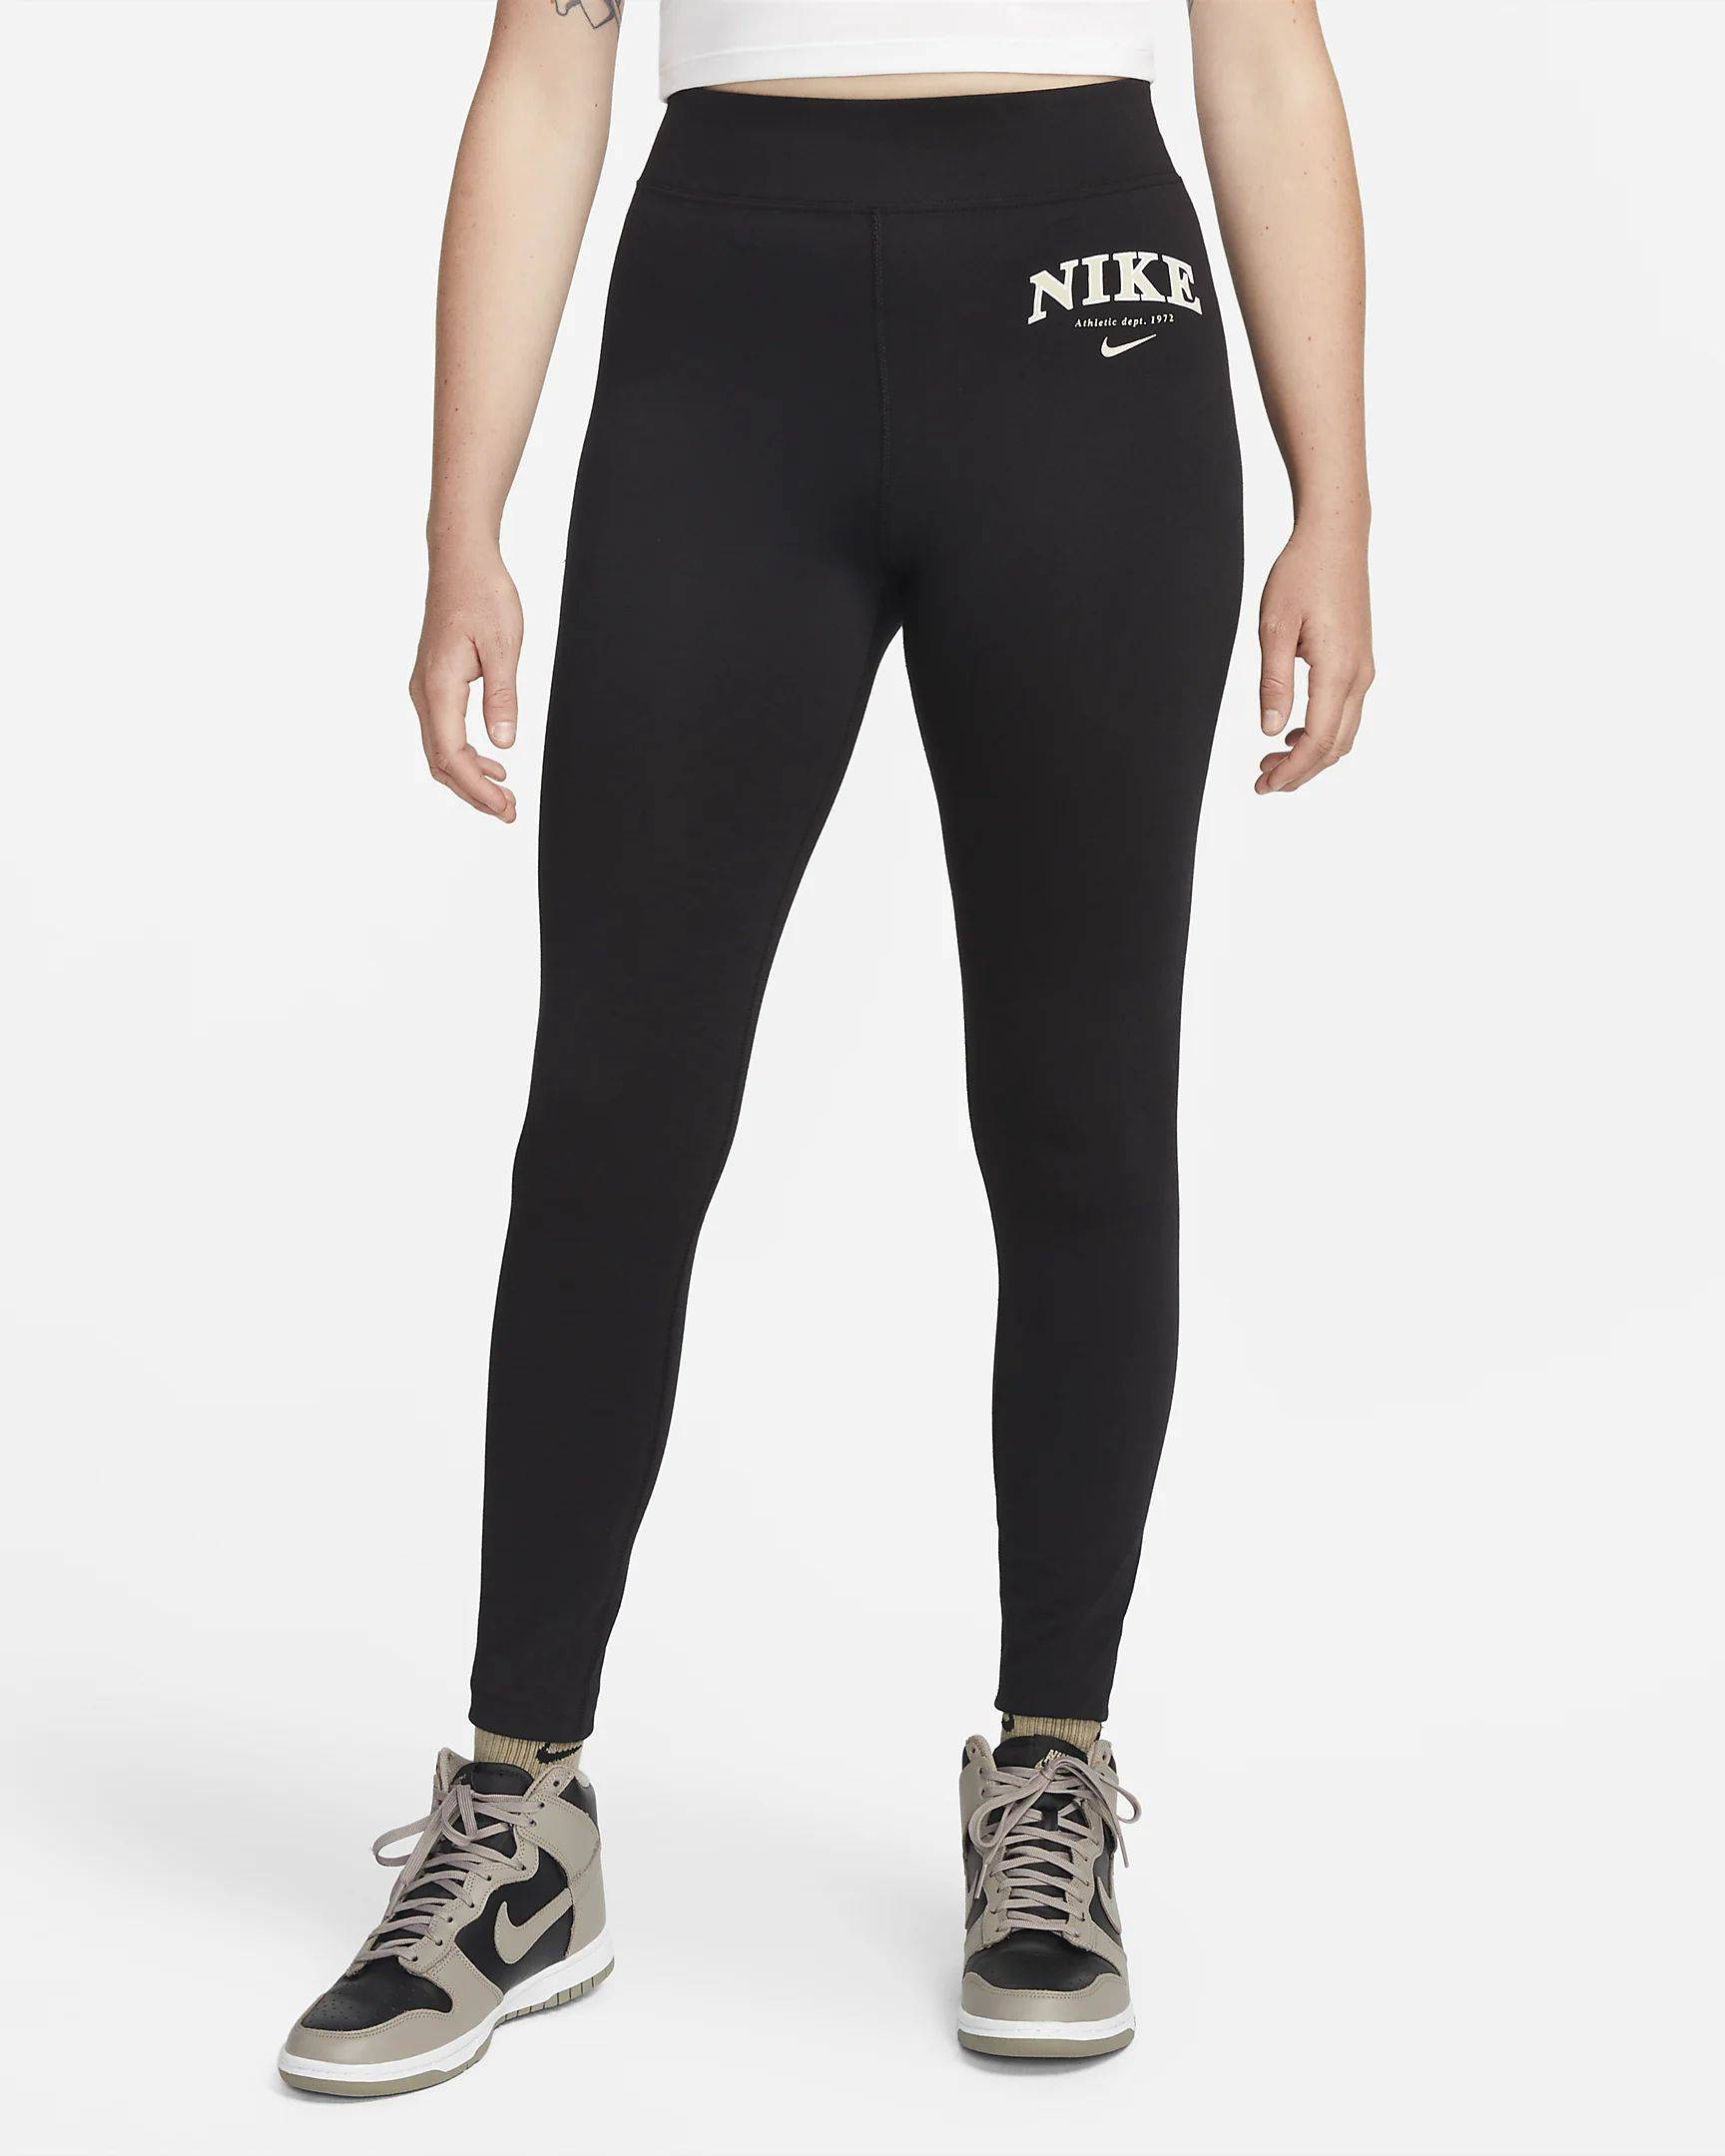 https://cms-cdn.thesolesupplier.co.uk/2022/07/nike-sportswear-high-waisted-leggings-black-feature.jpg